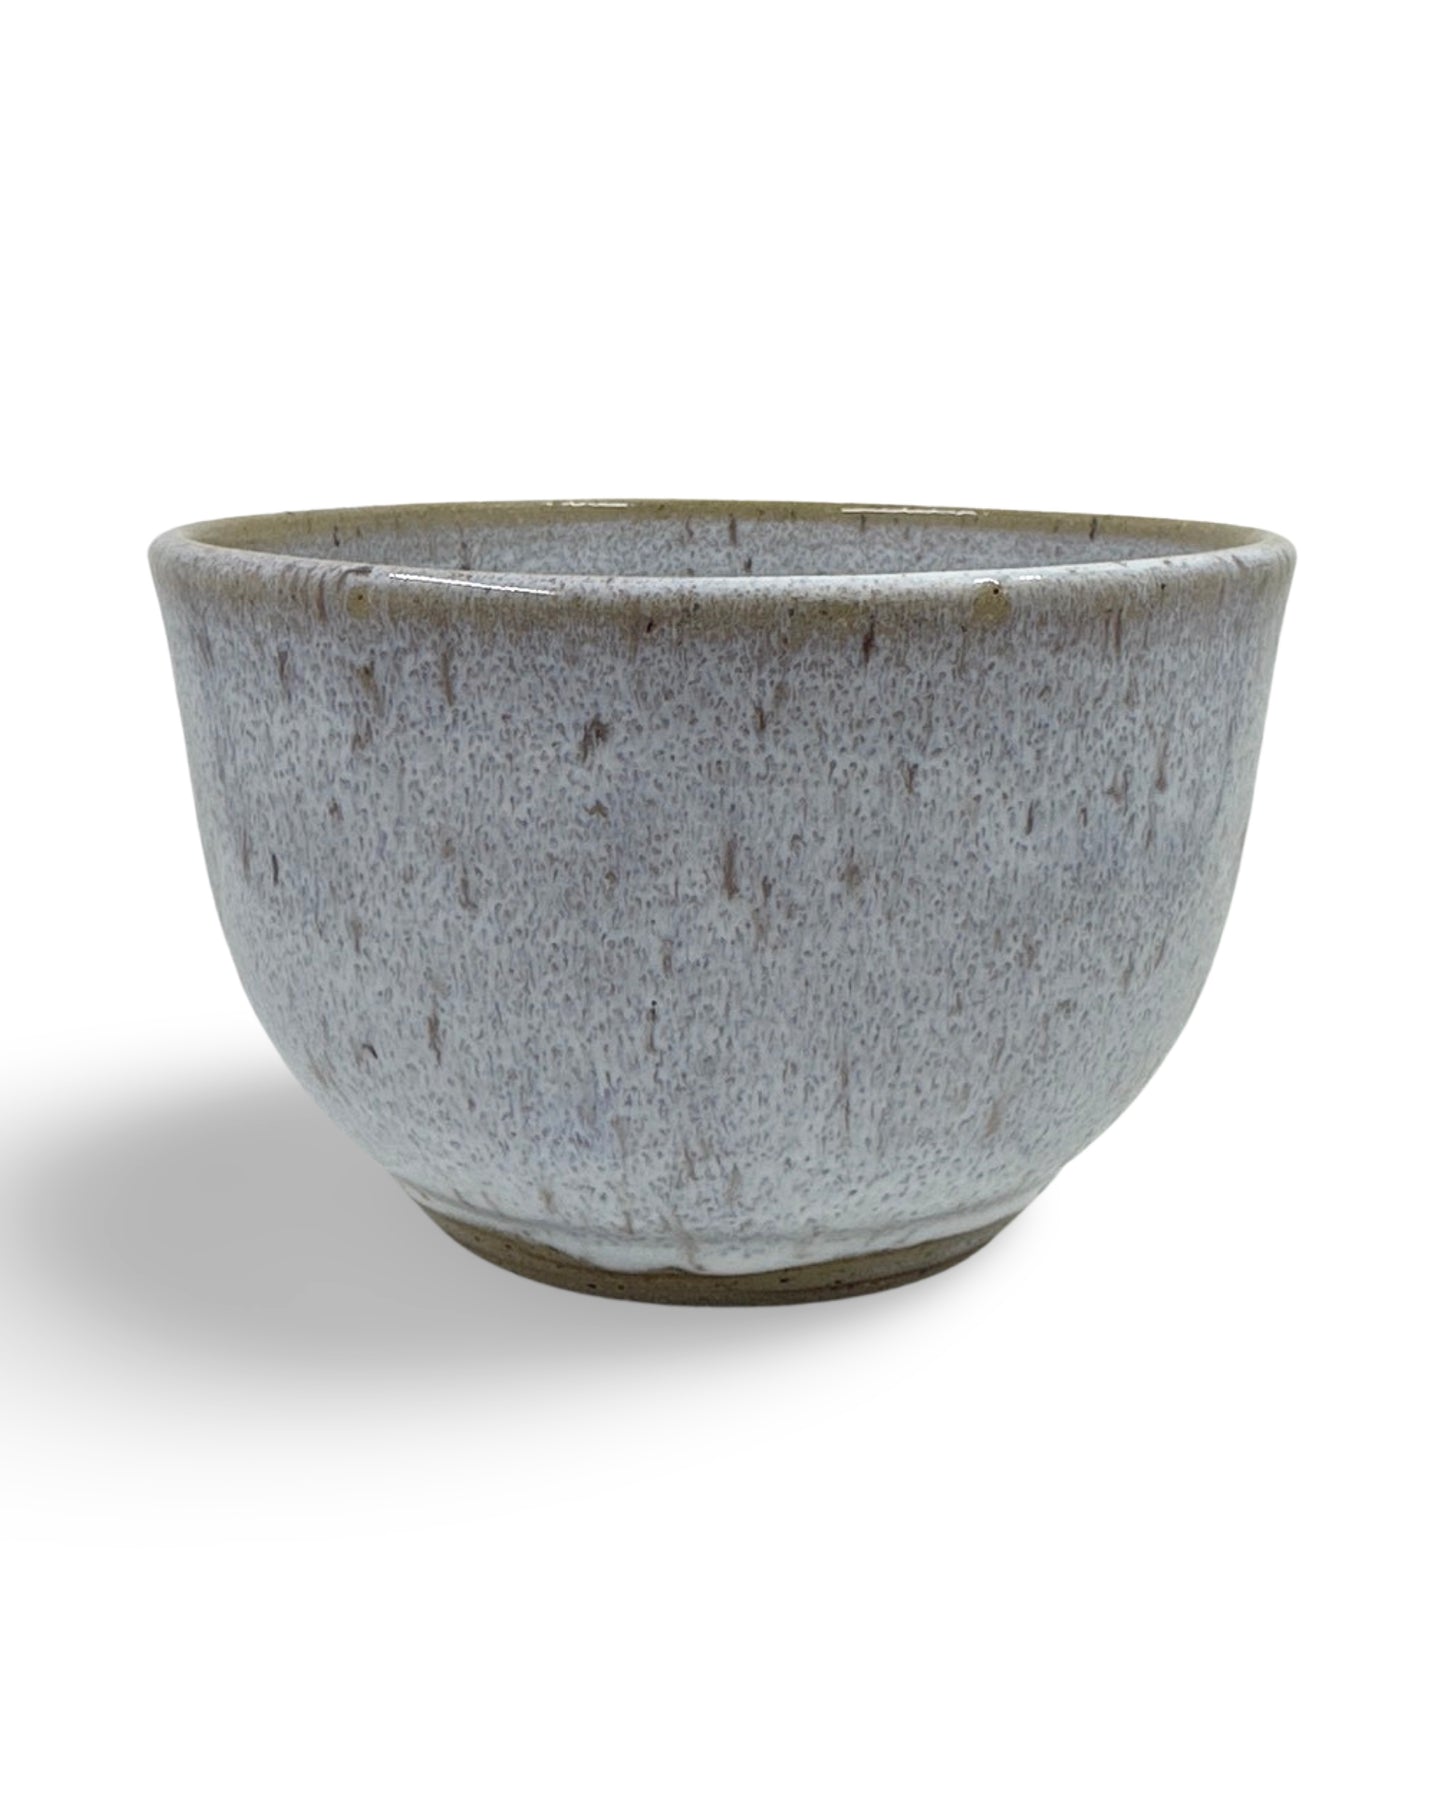 Triple C Pottery Small Bowl